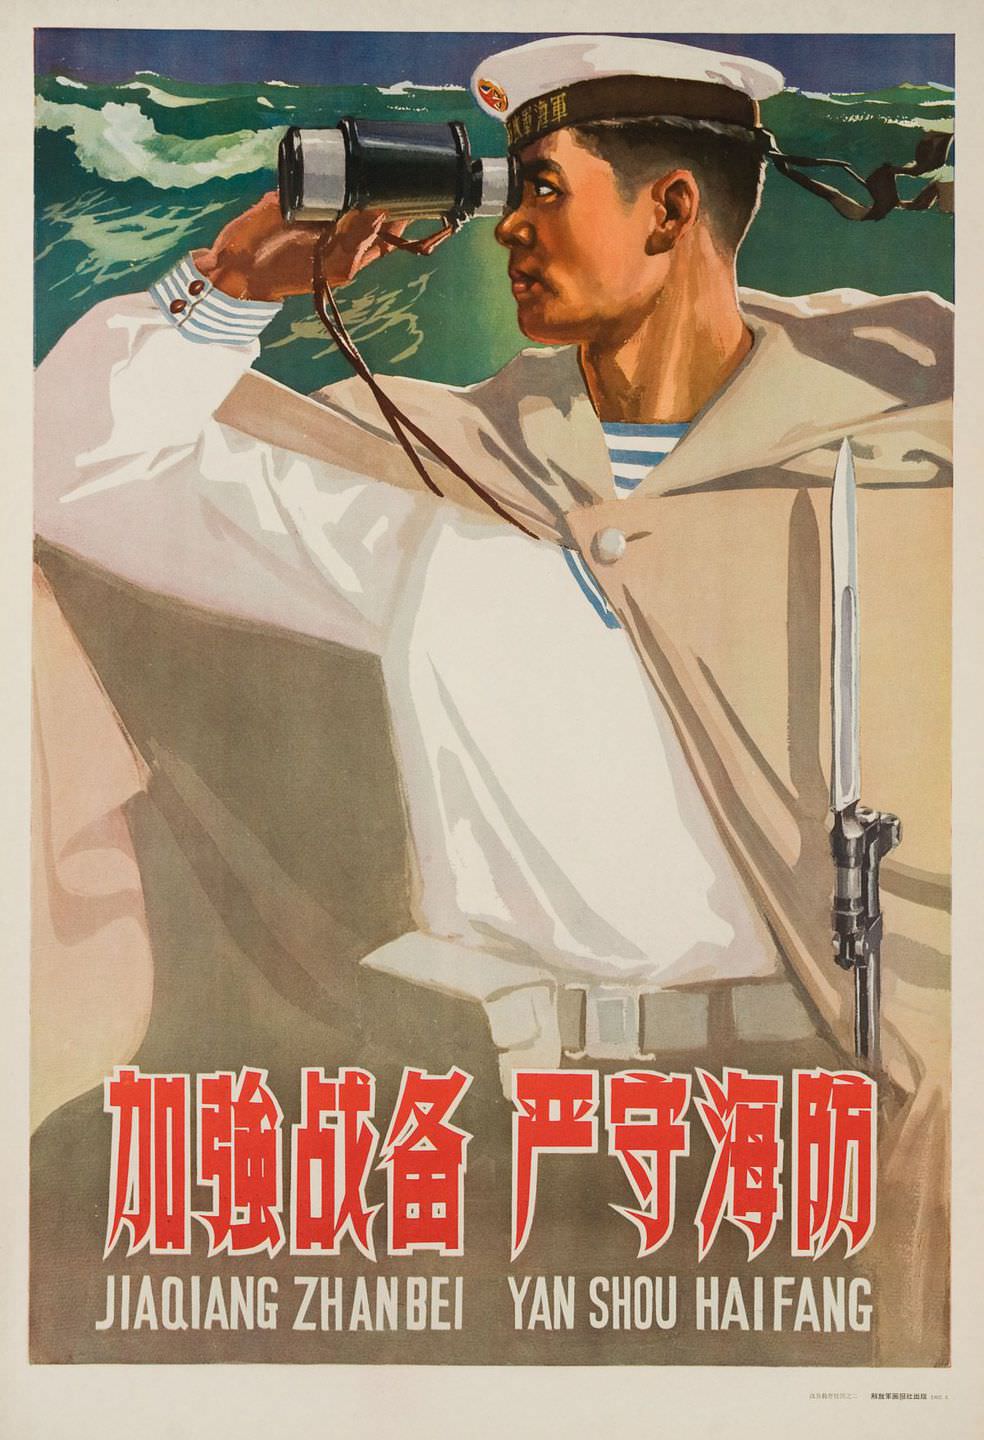 Enhance the Coastal Defense of the Motherland,1962